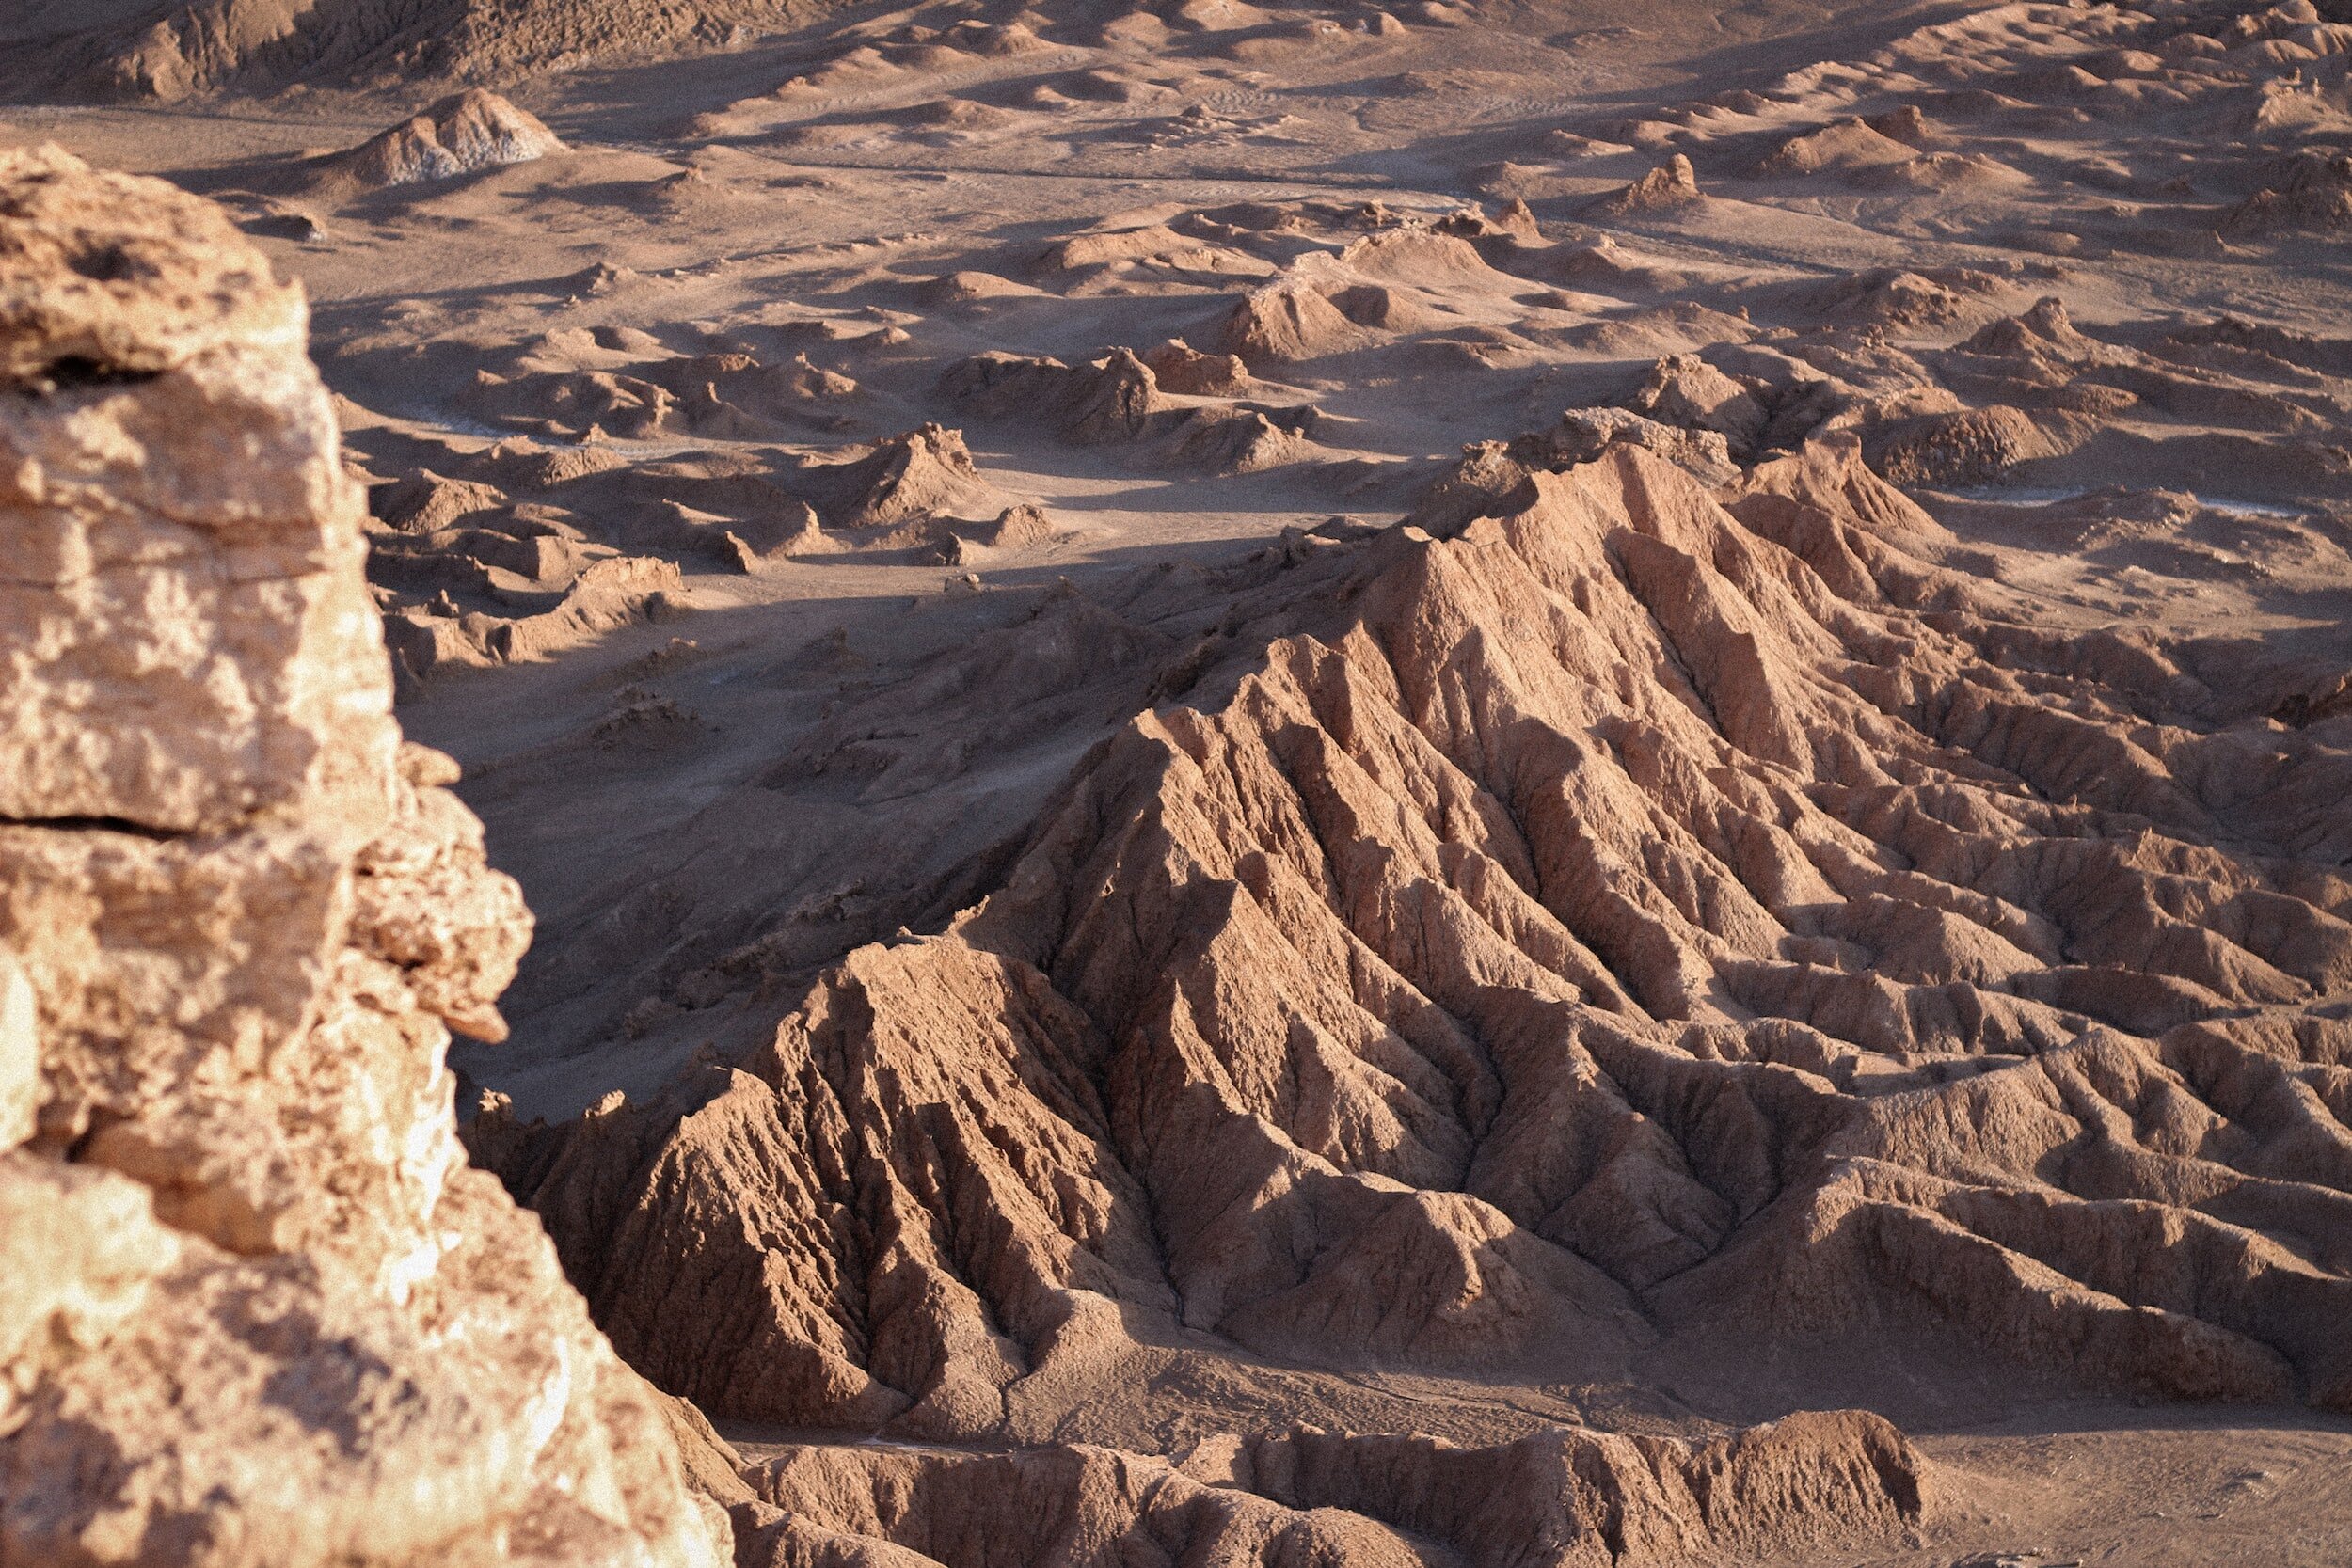 A ridge line surrounded by rocky outcrops in the desolate and Mars-like Valle de la Luna park in San Pedro de Atacama